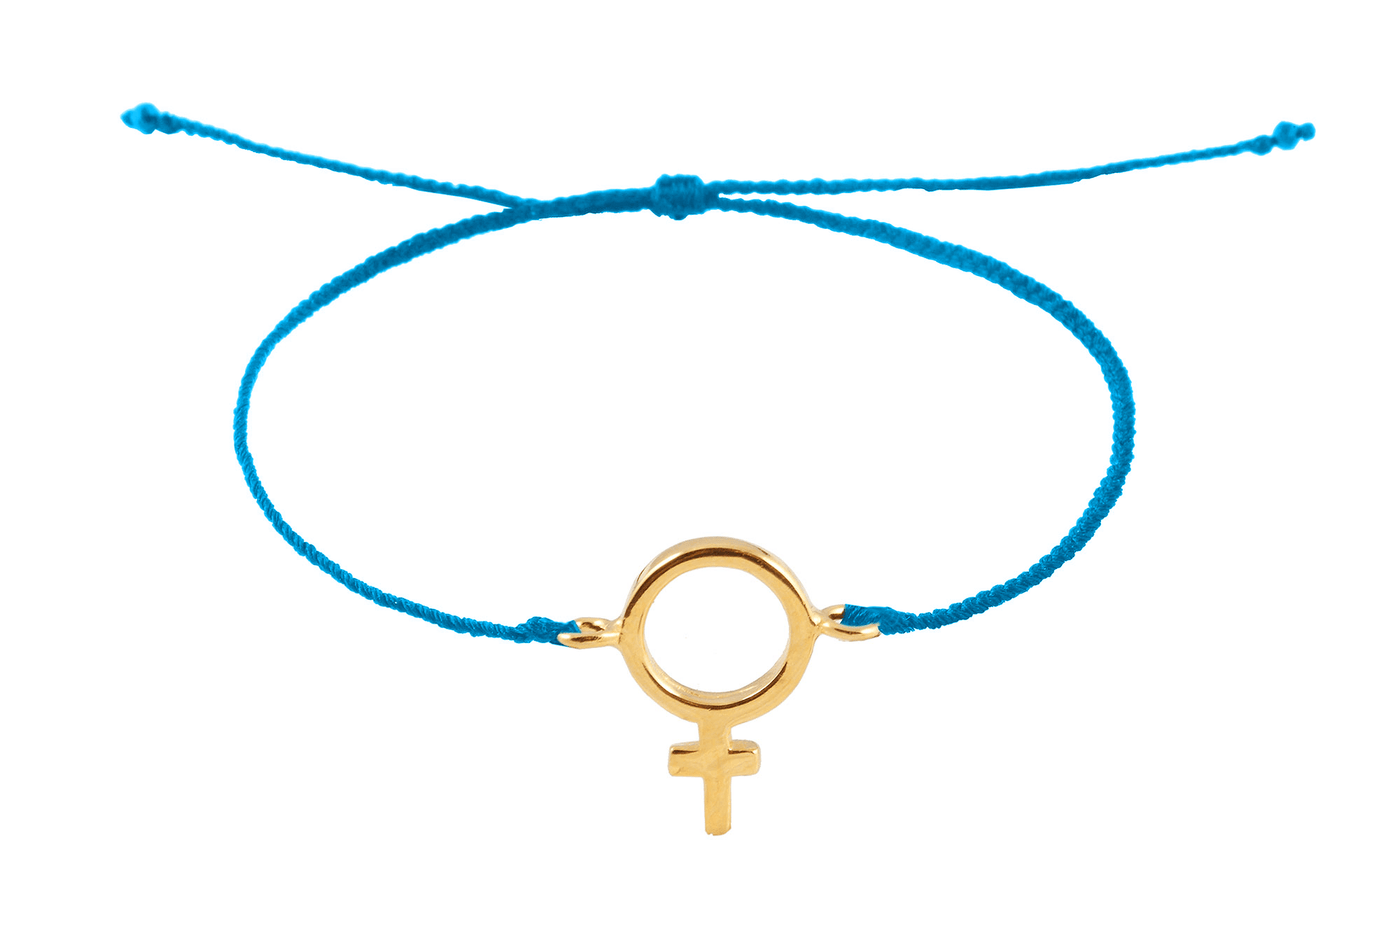 String bracelet with Venus amulet. Gold plated